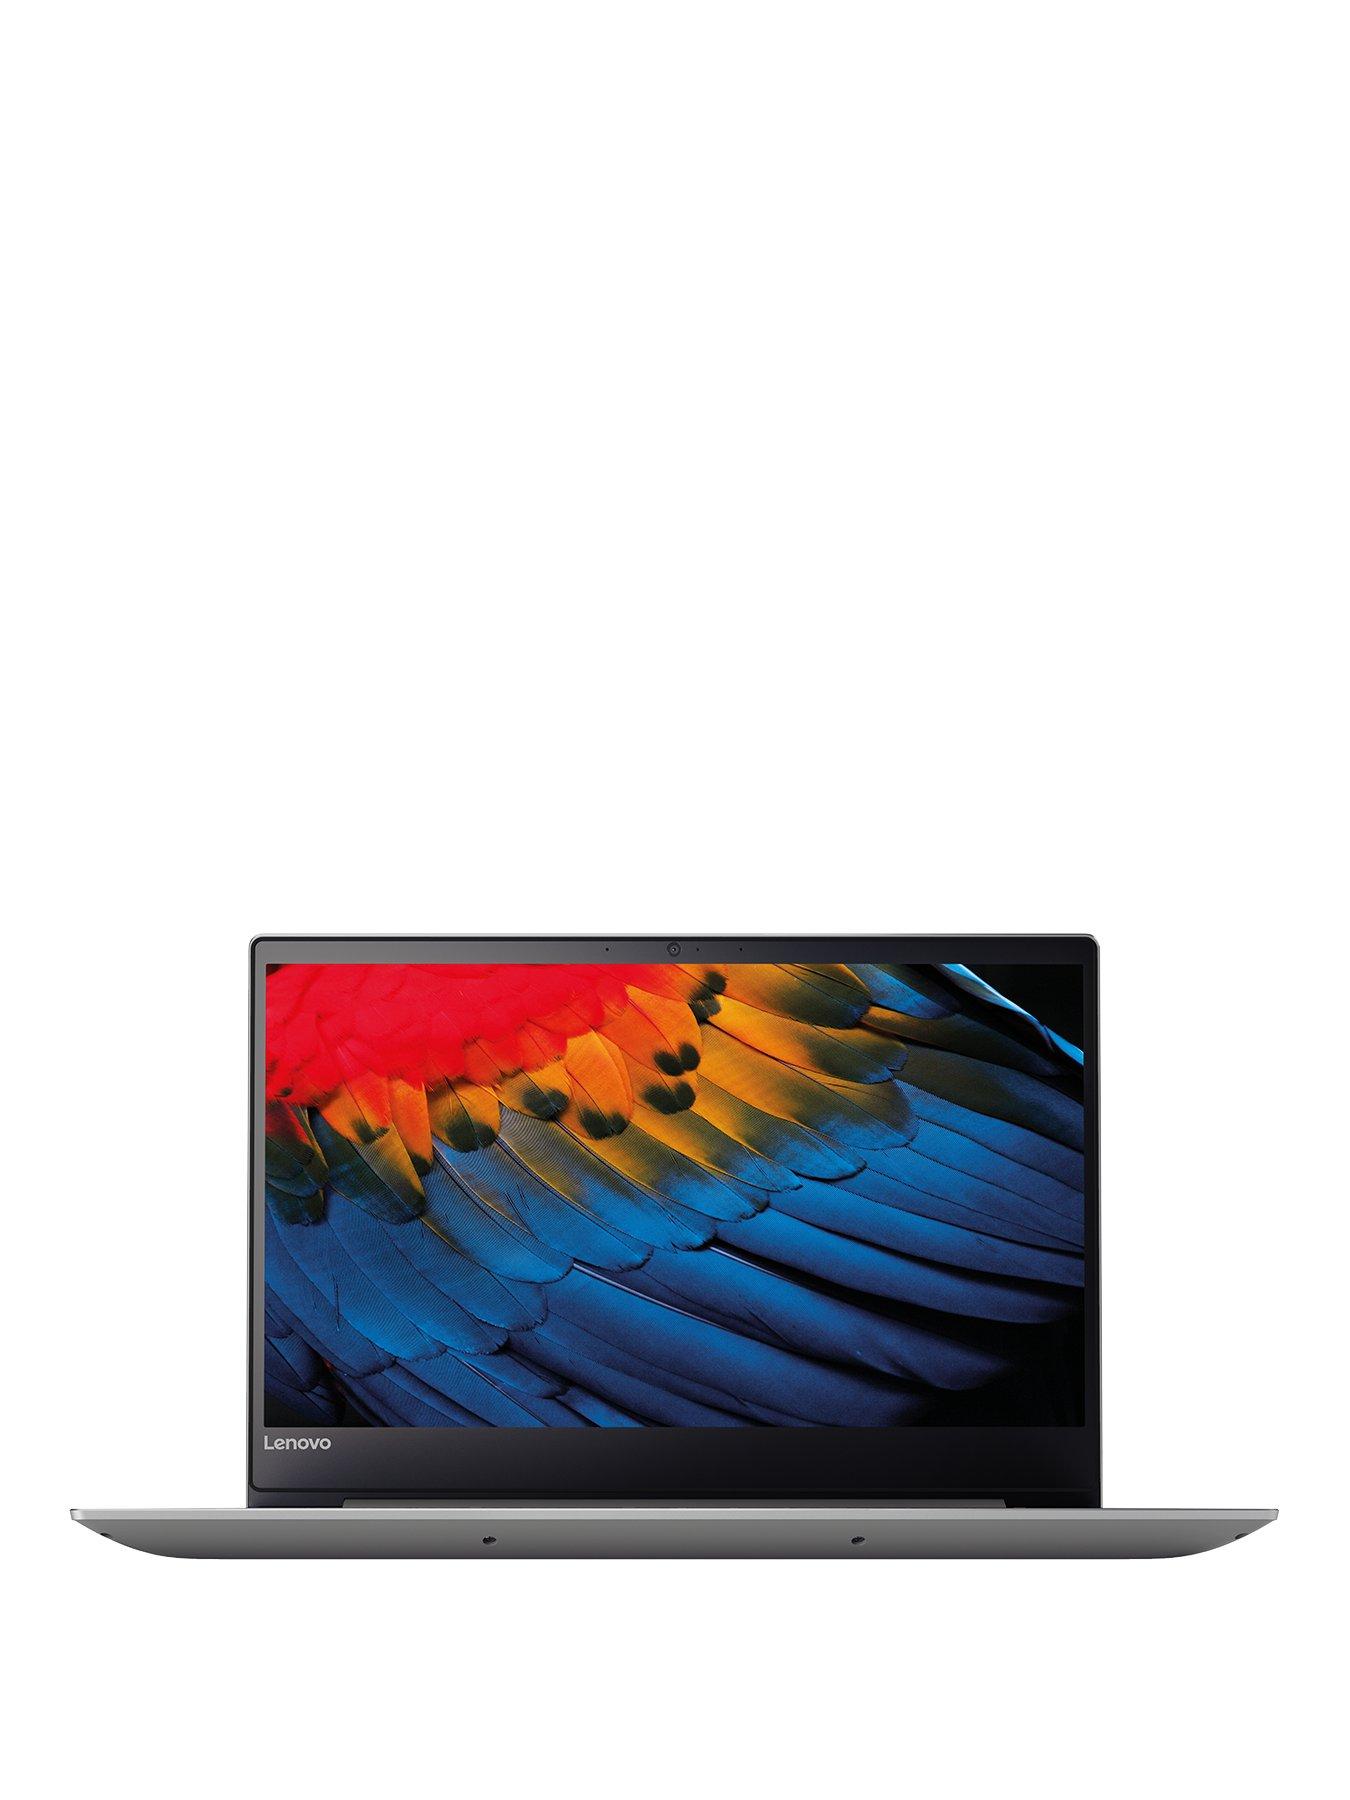 Lenovo Yoga 720 Intel&Reg; Core&Trade;  I5 Processor, 8Gb Ram, 256Gb Ssd, 13.3 Inch Full Hd Laptop With Intel&Reg; Uhd Graphics 620 – Grey